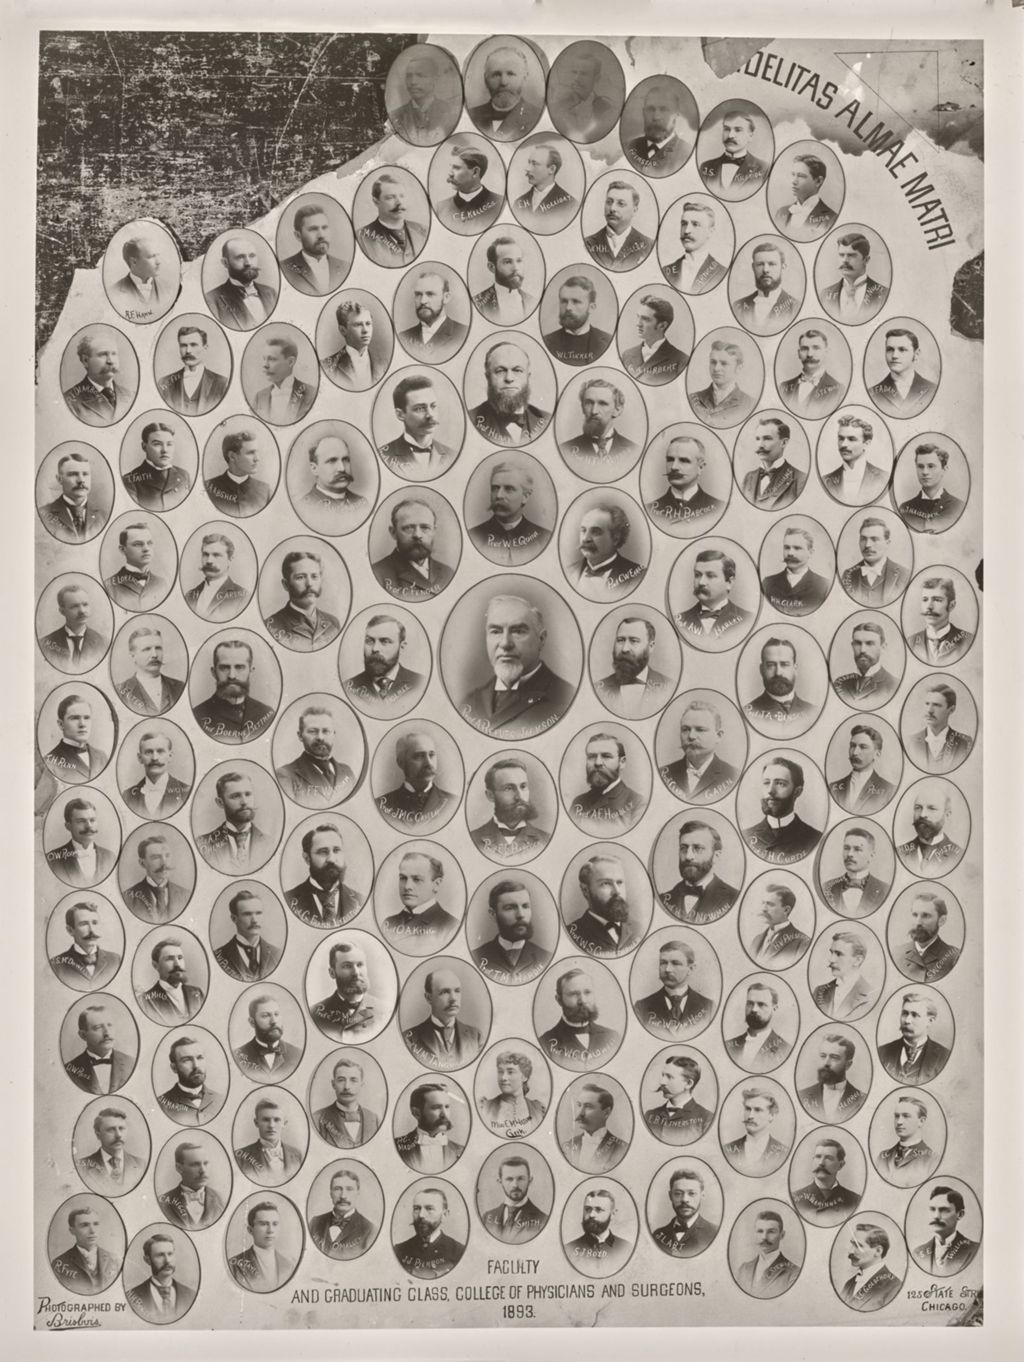 Miniature of 1893 graduating class, University of Illinois College of Medicine